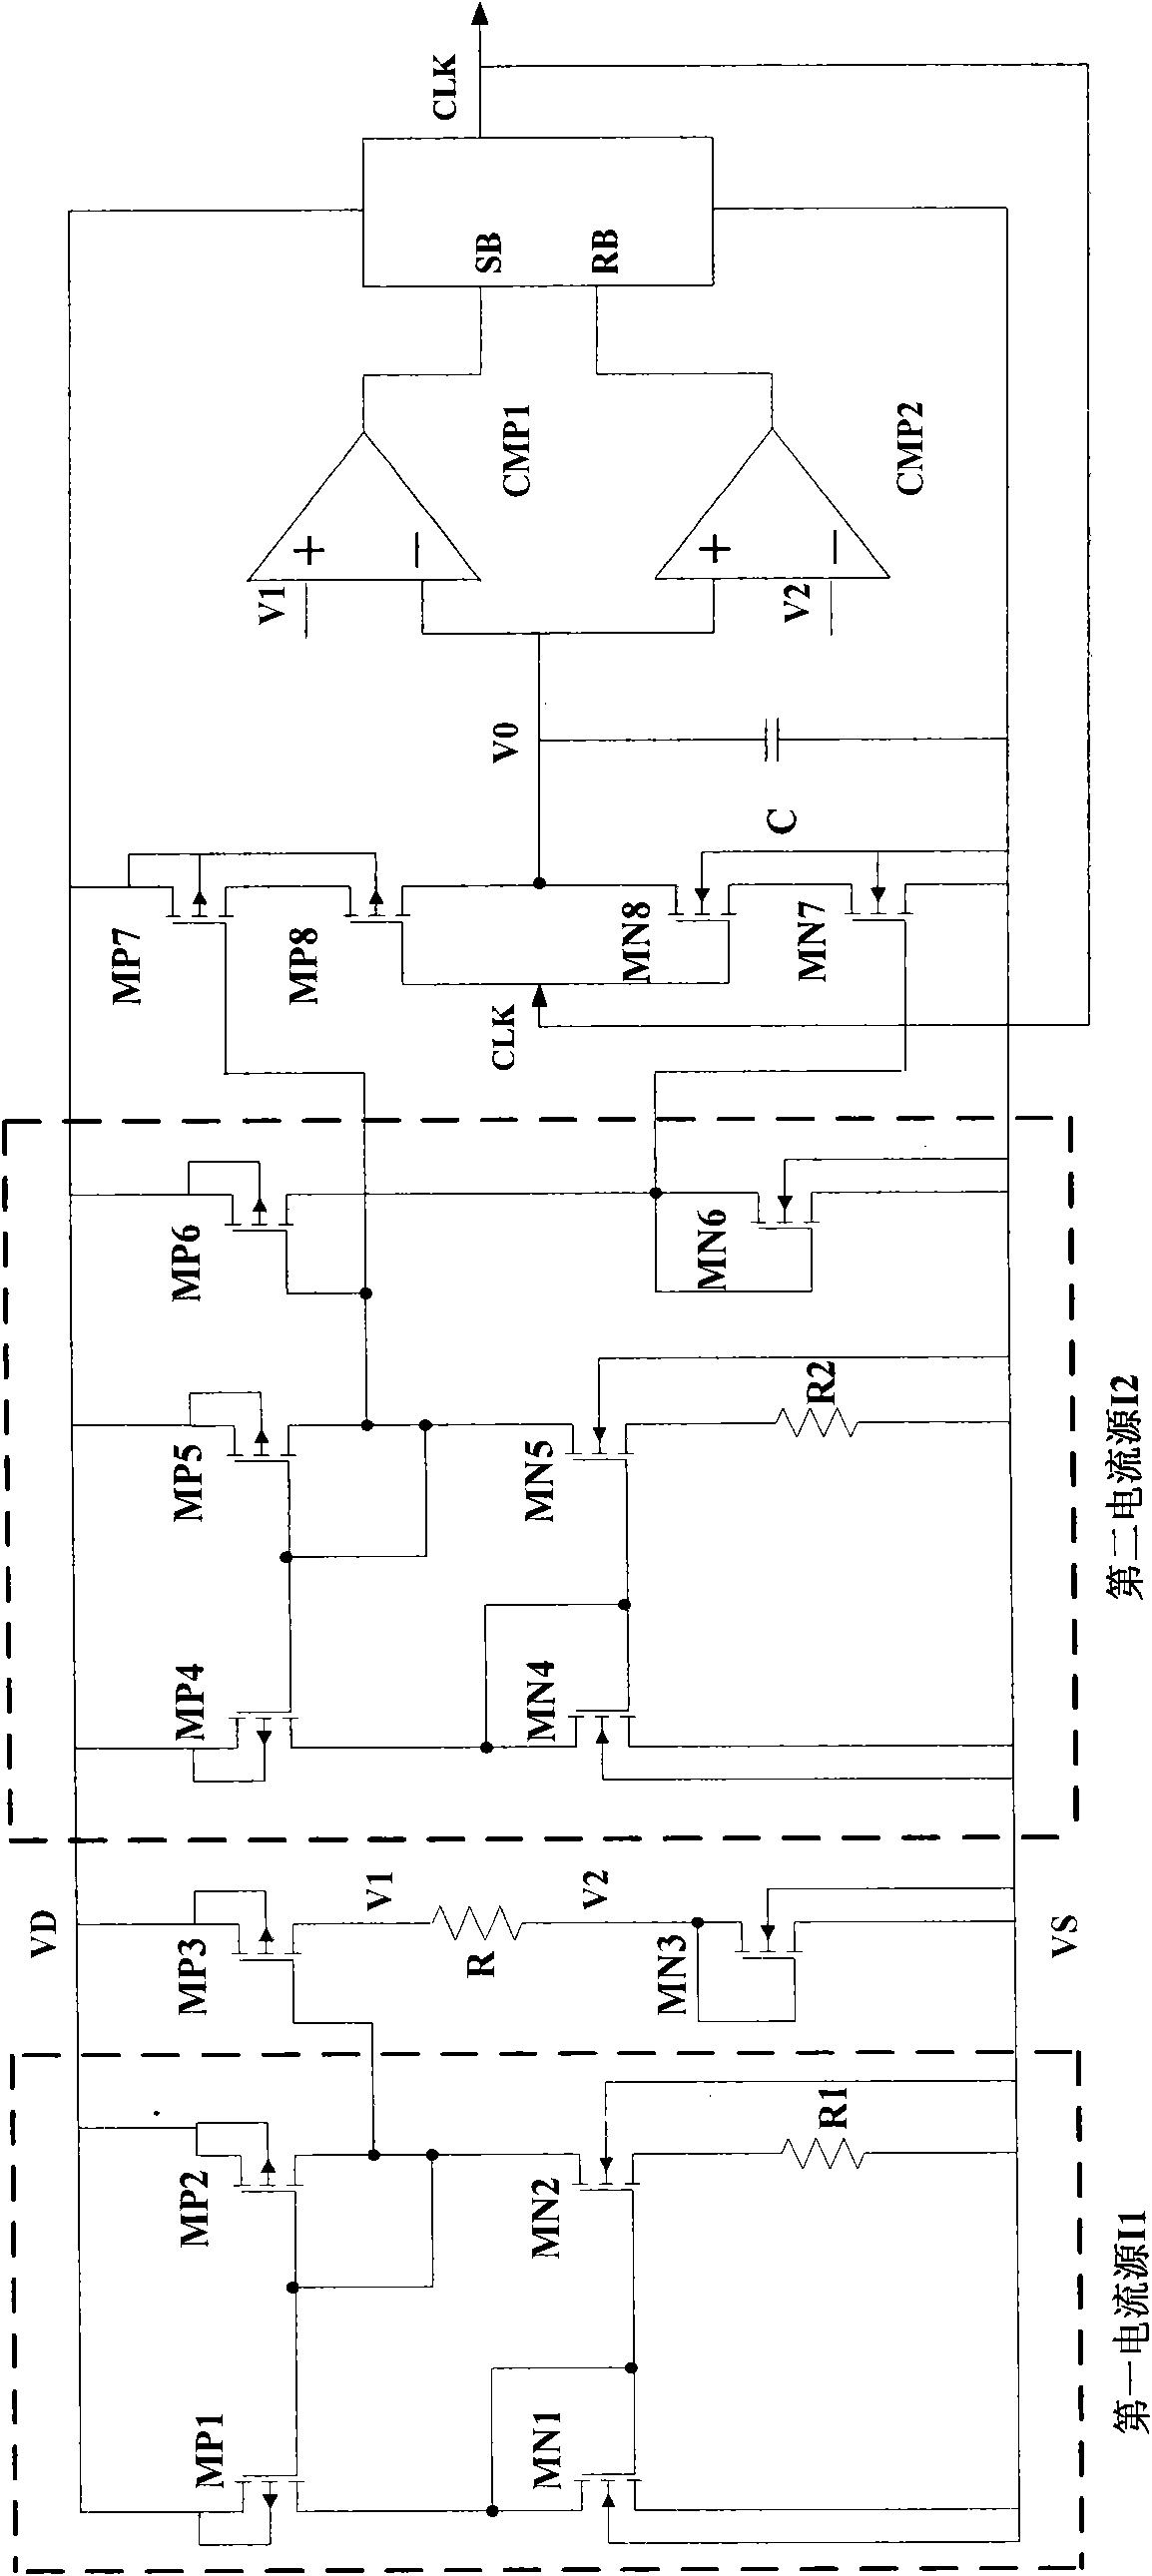 Clock generating circuit